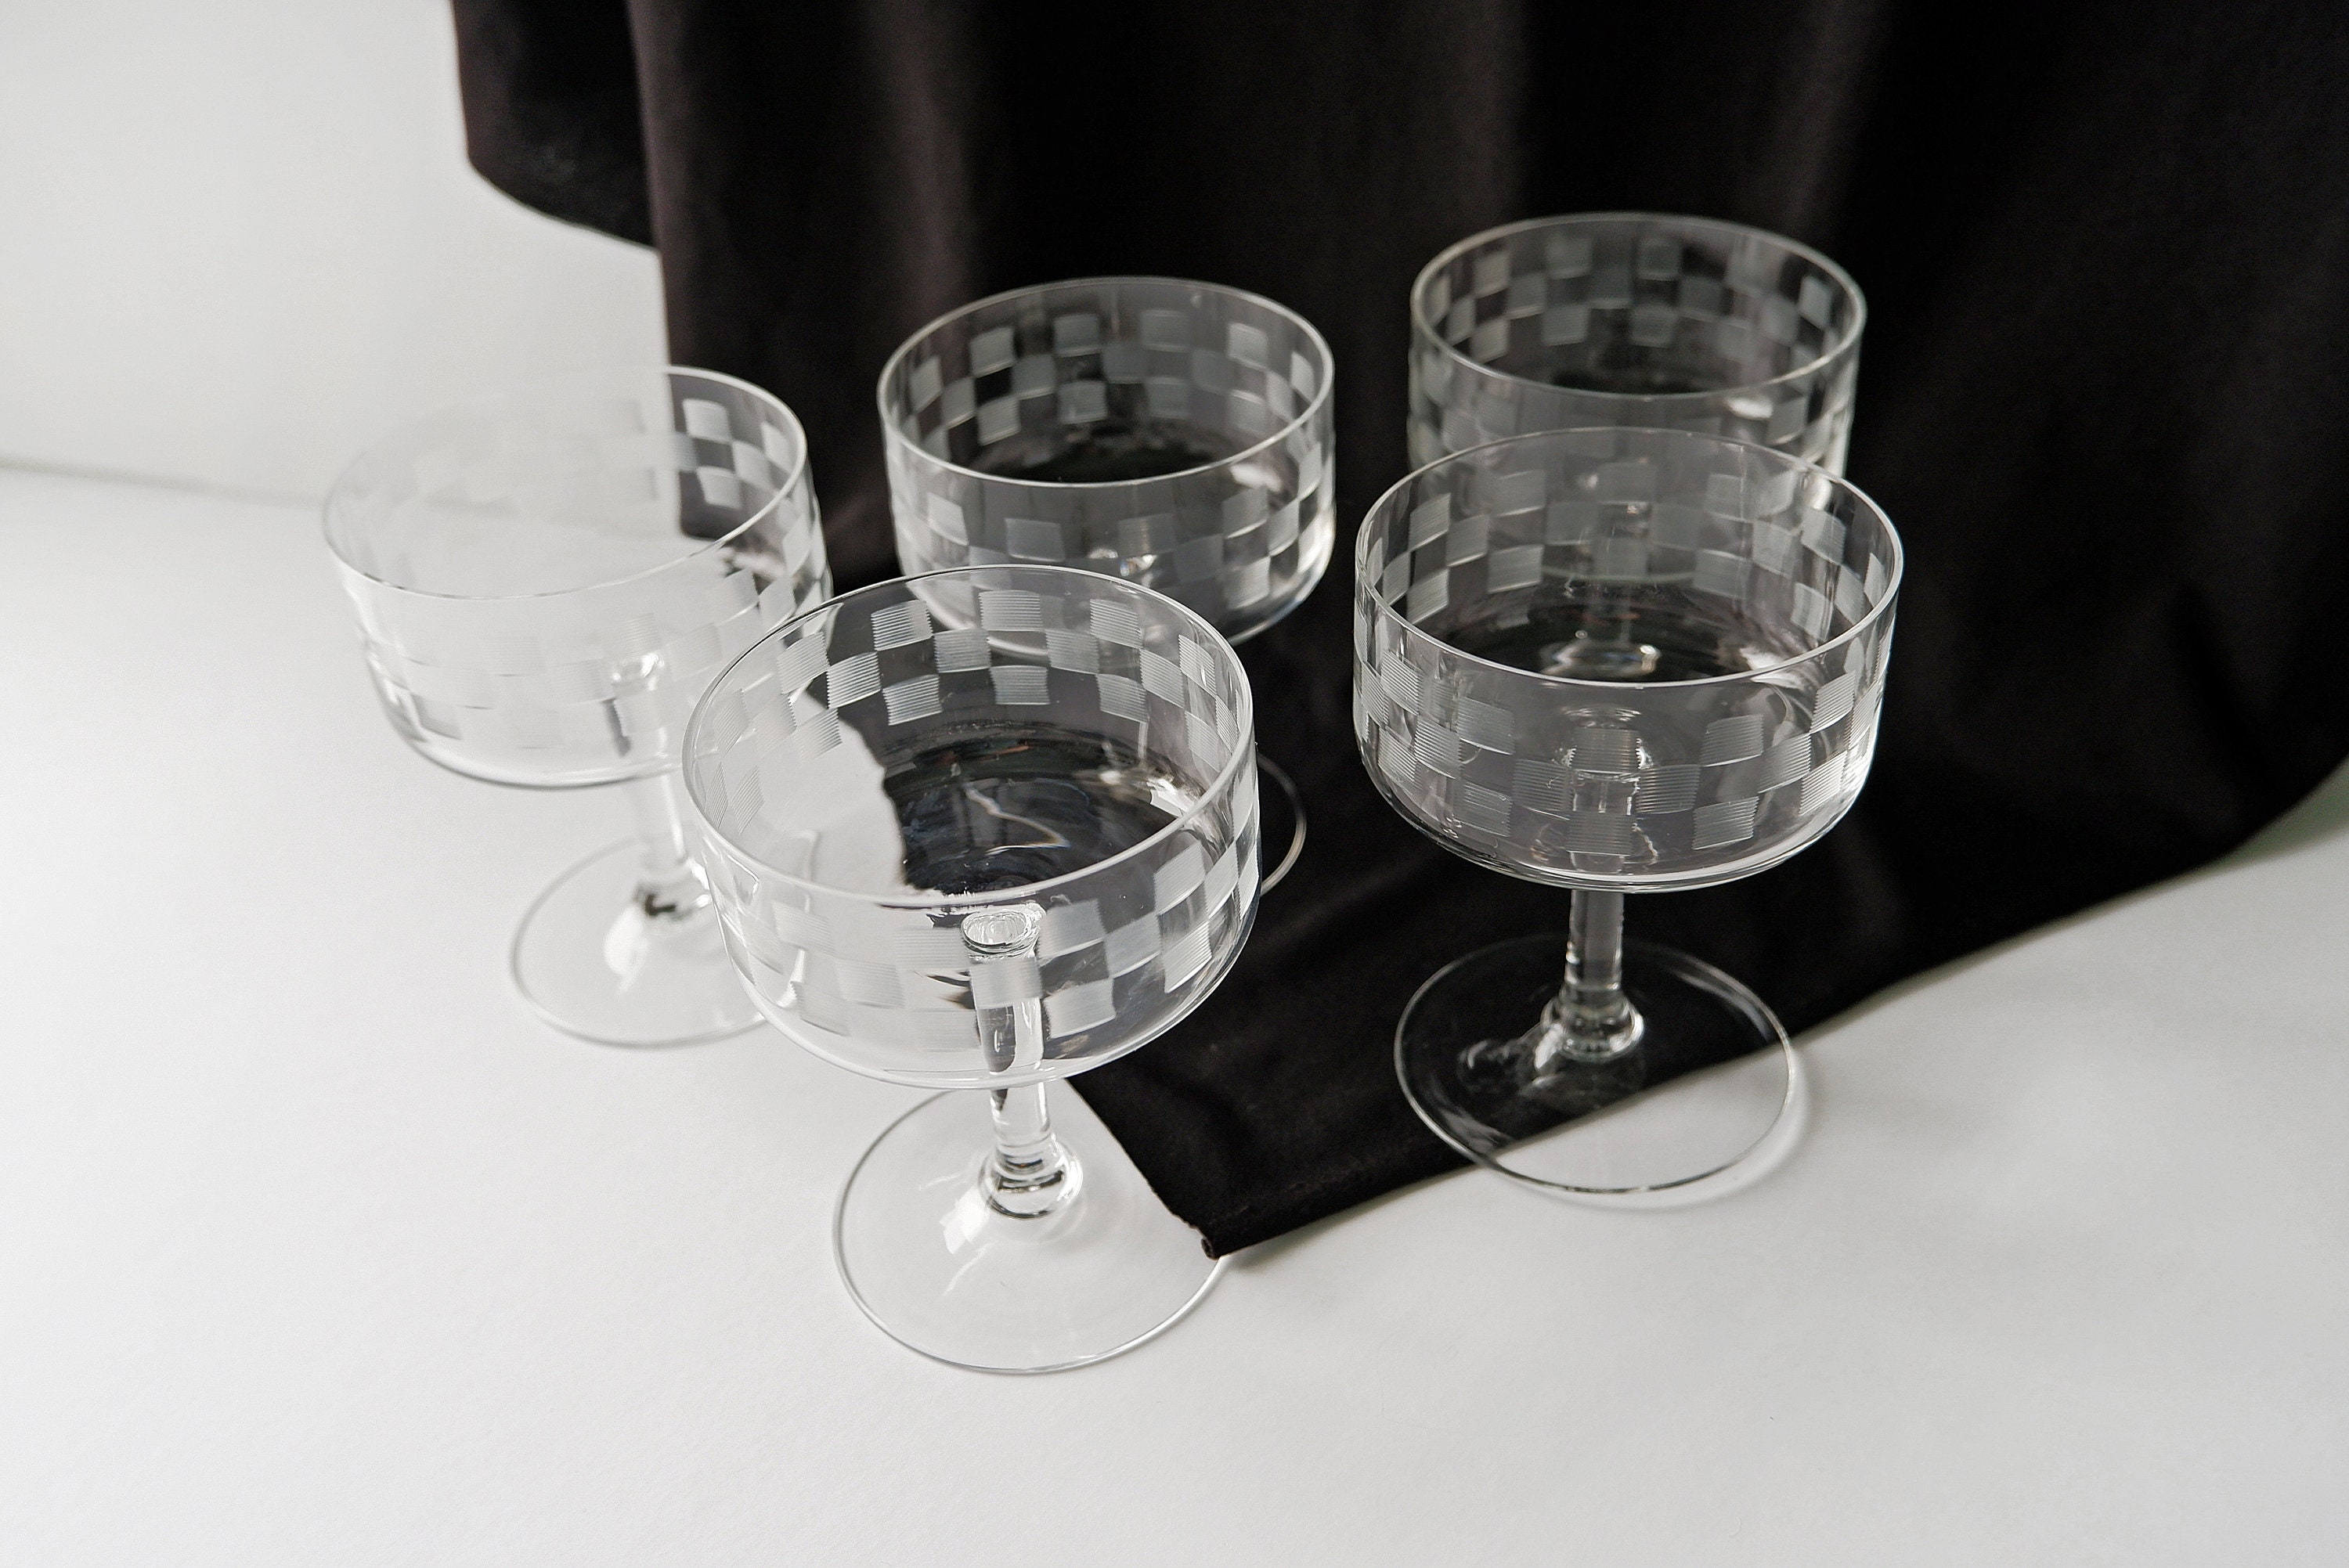 Short Stem Wine Glasses - Kimura's Japanese Elegance